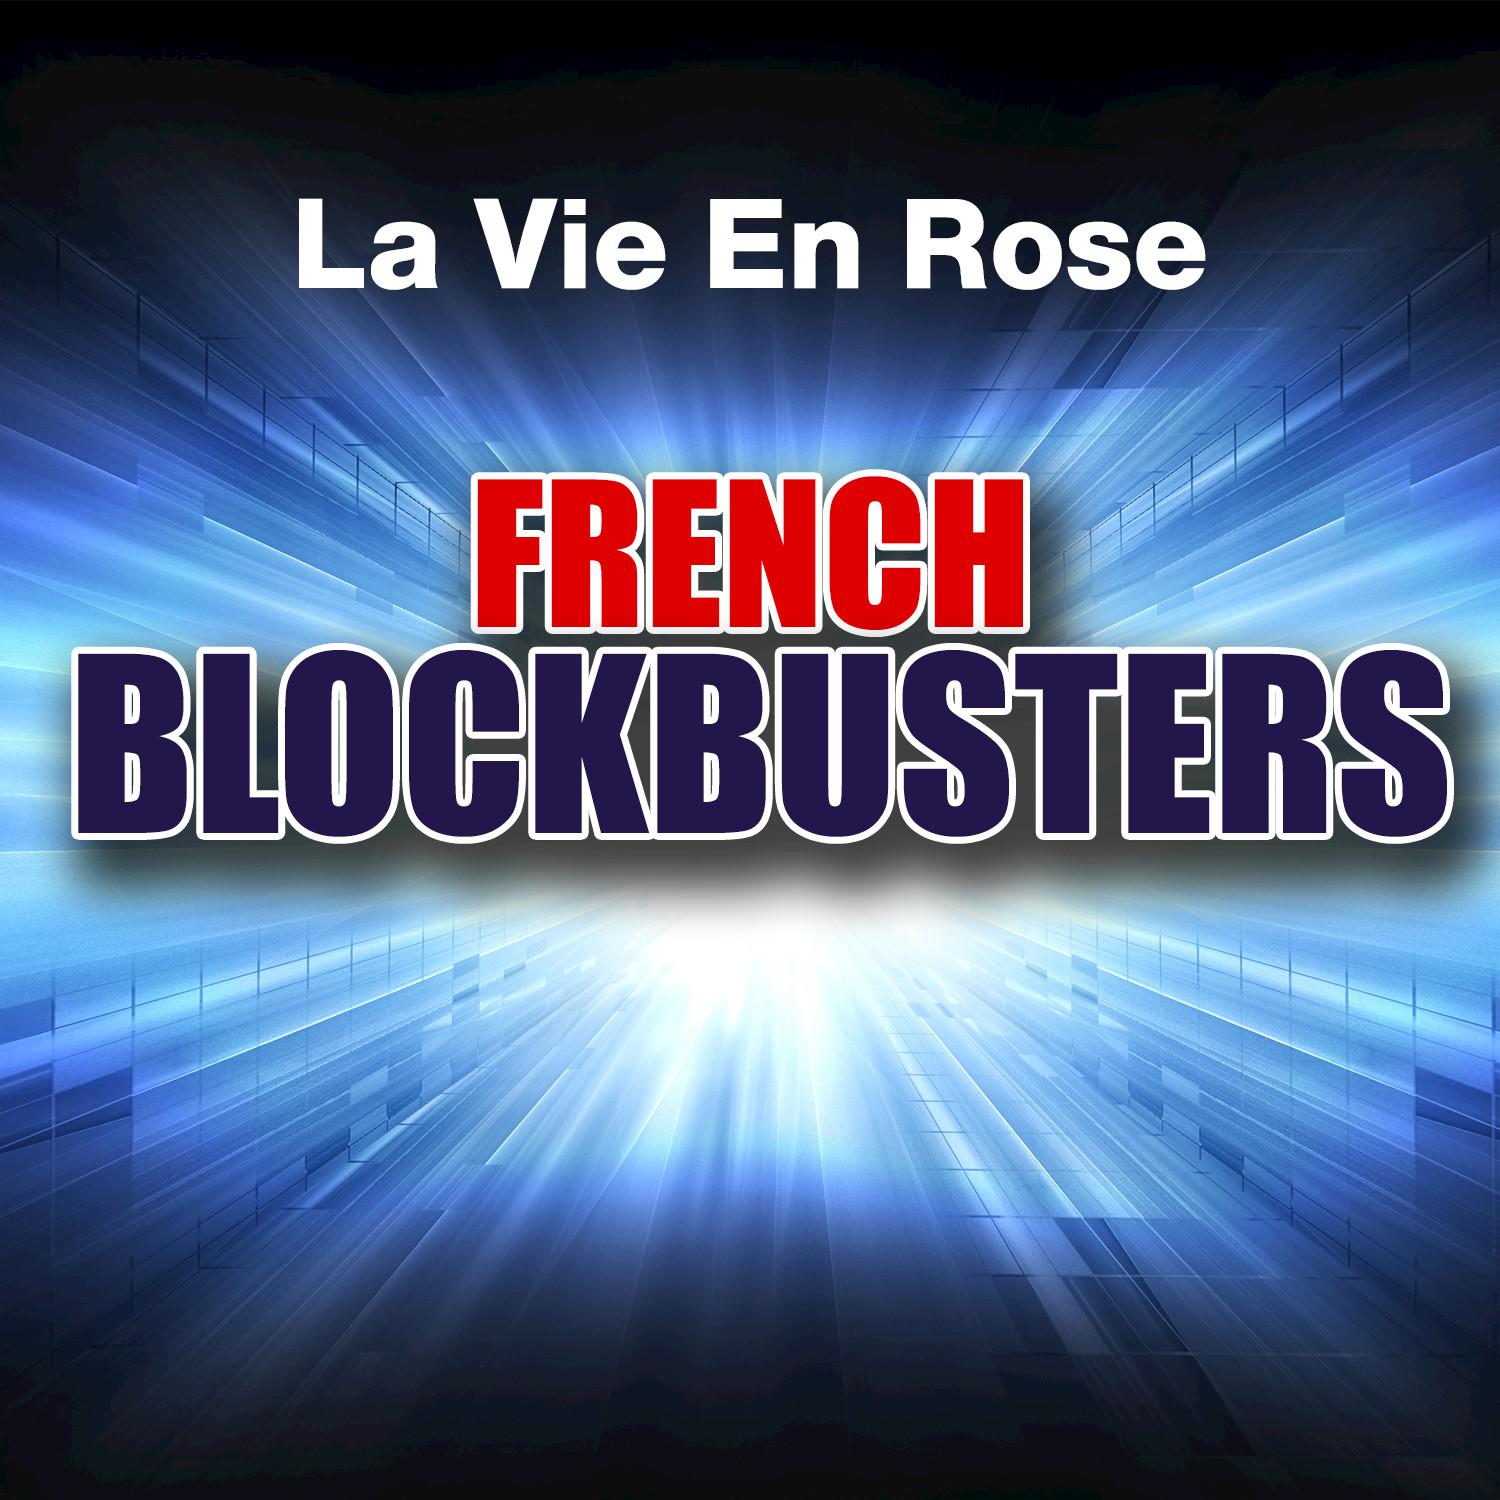 La vie en rose: French Blockbusters